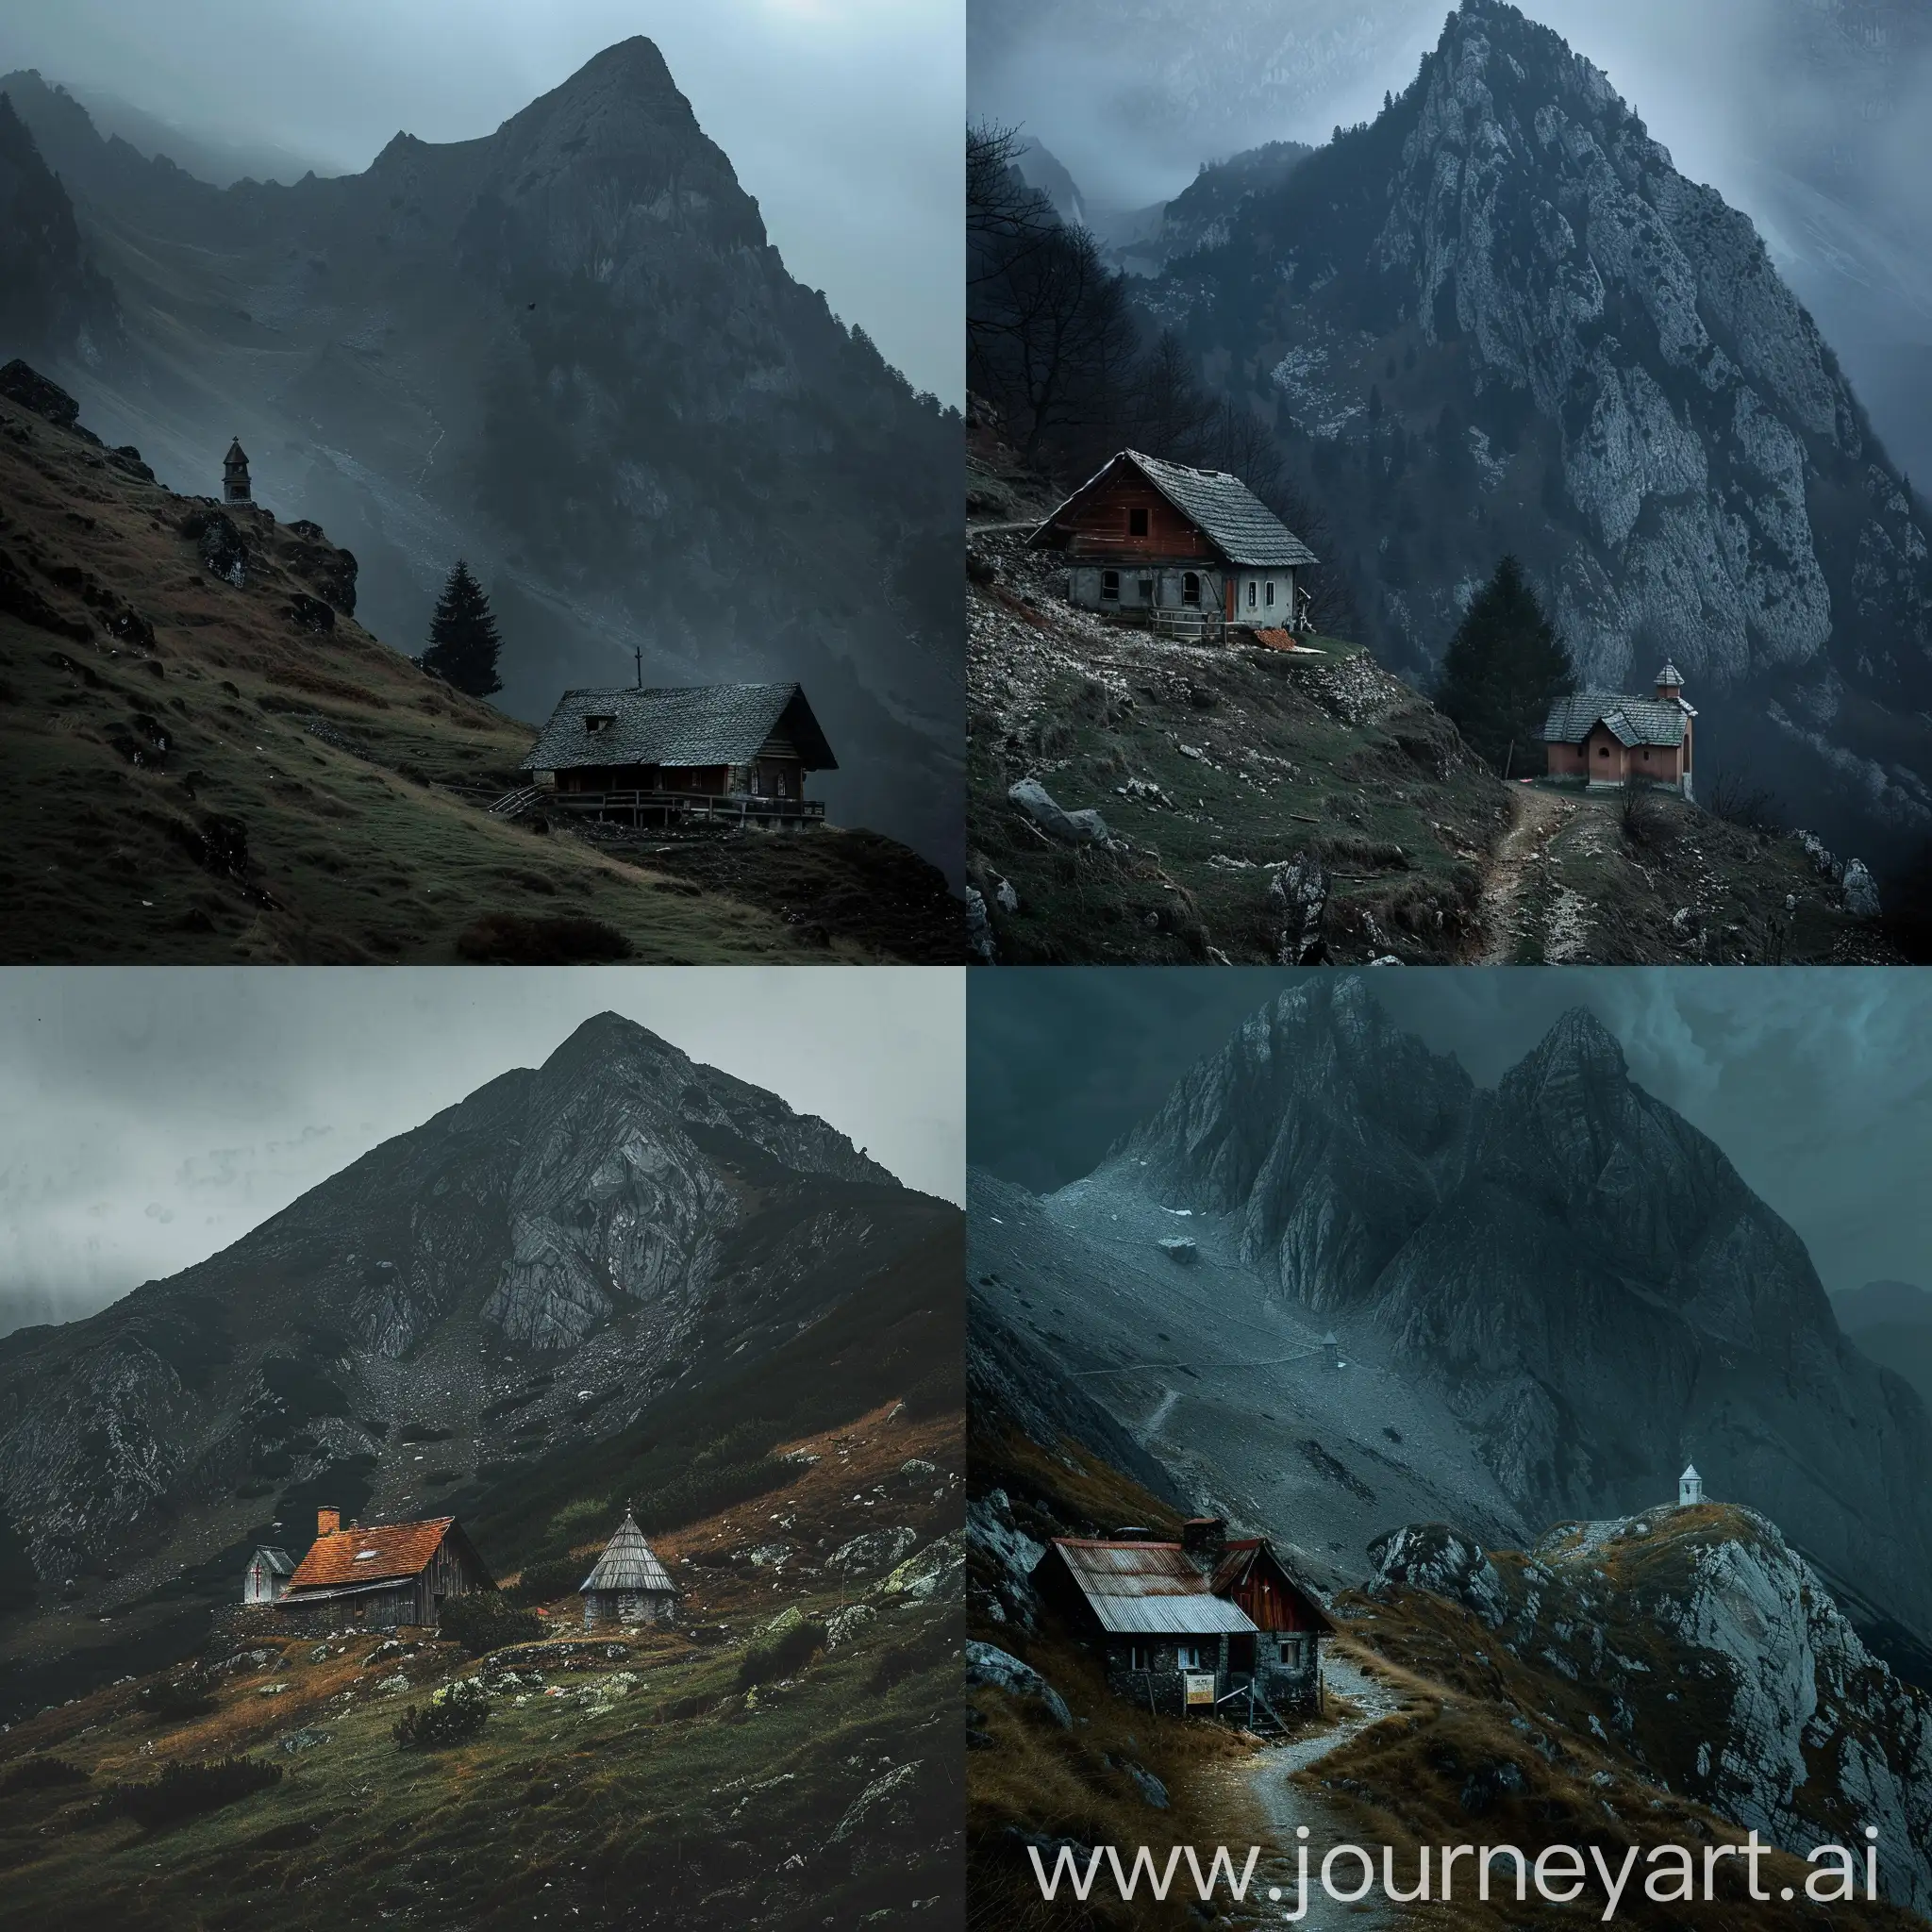 Serene-Romanian-Mountain-Hut-with-Chapel-Amidst-Gloomy-Landscape